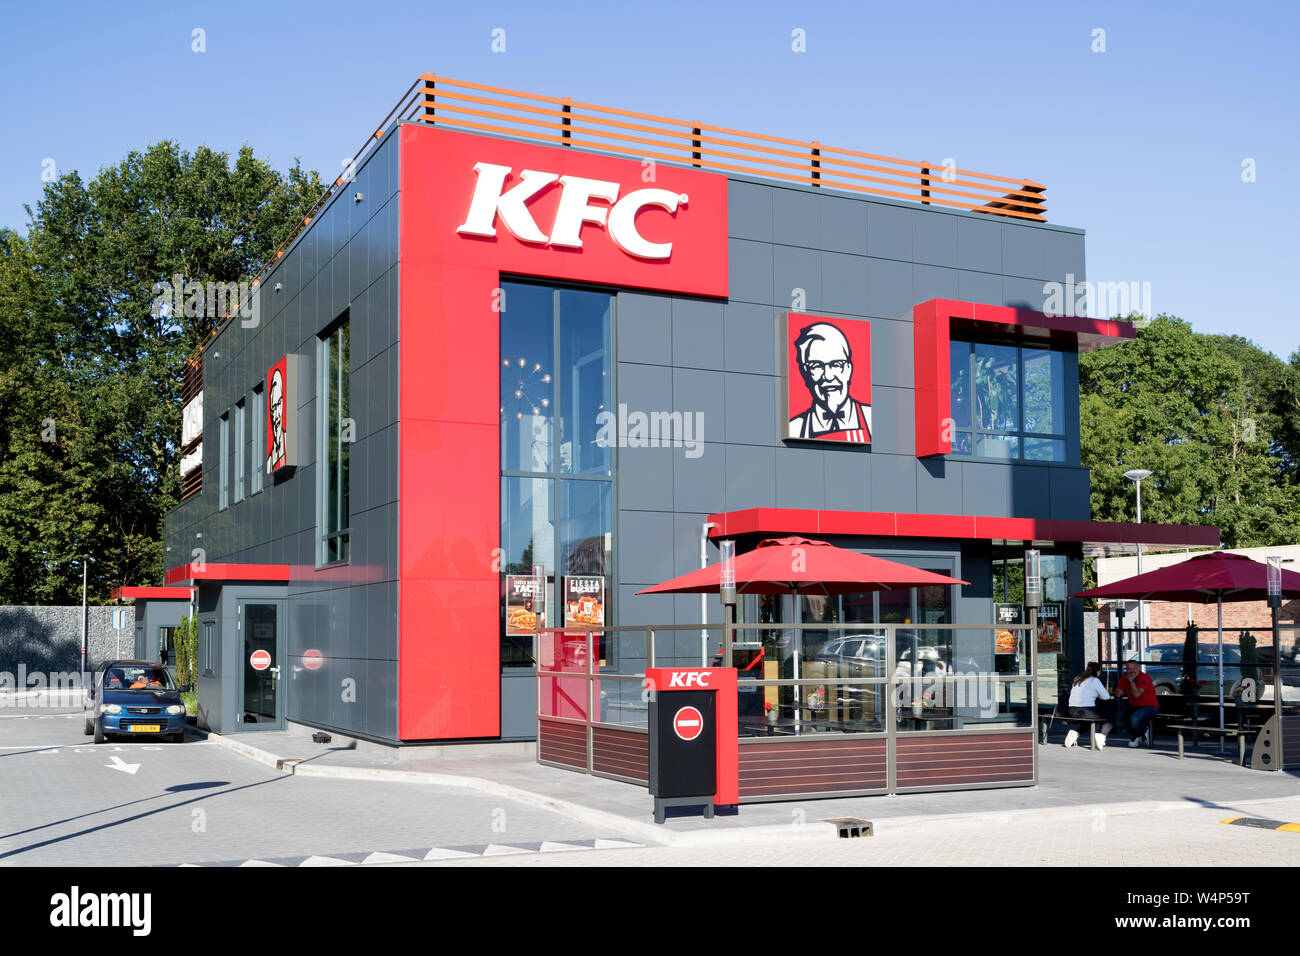 KFC fast food restaurant in Spijkenisse, The Netherlands. Kentucky Fried Chicken (KFC) is the world's second largest restaurant chain. Stock Photo